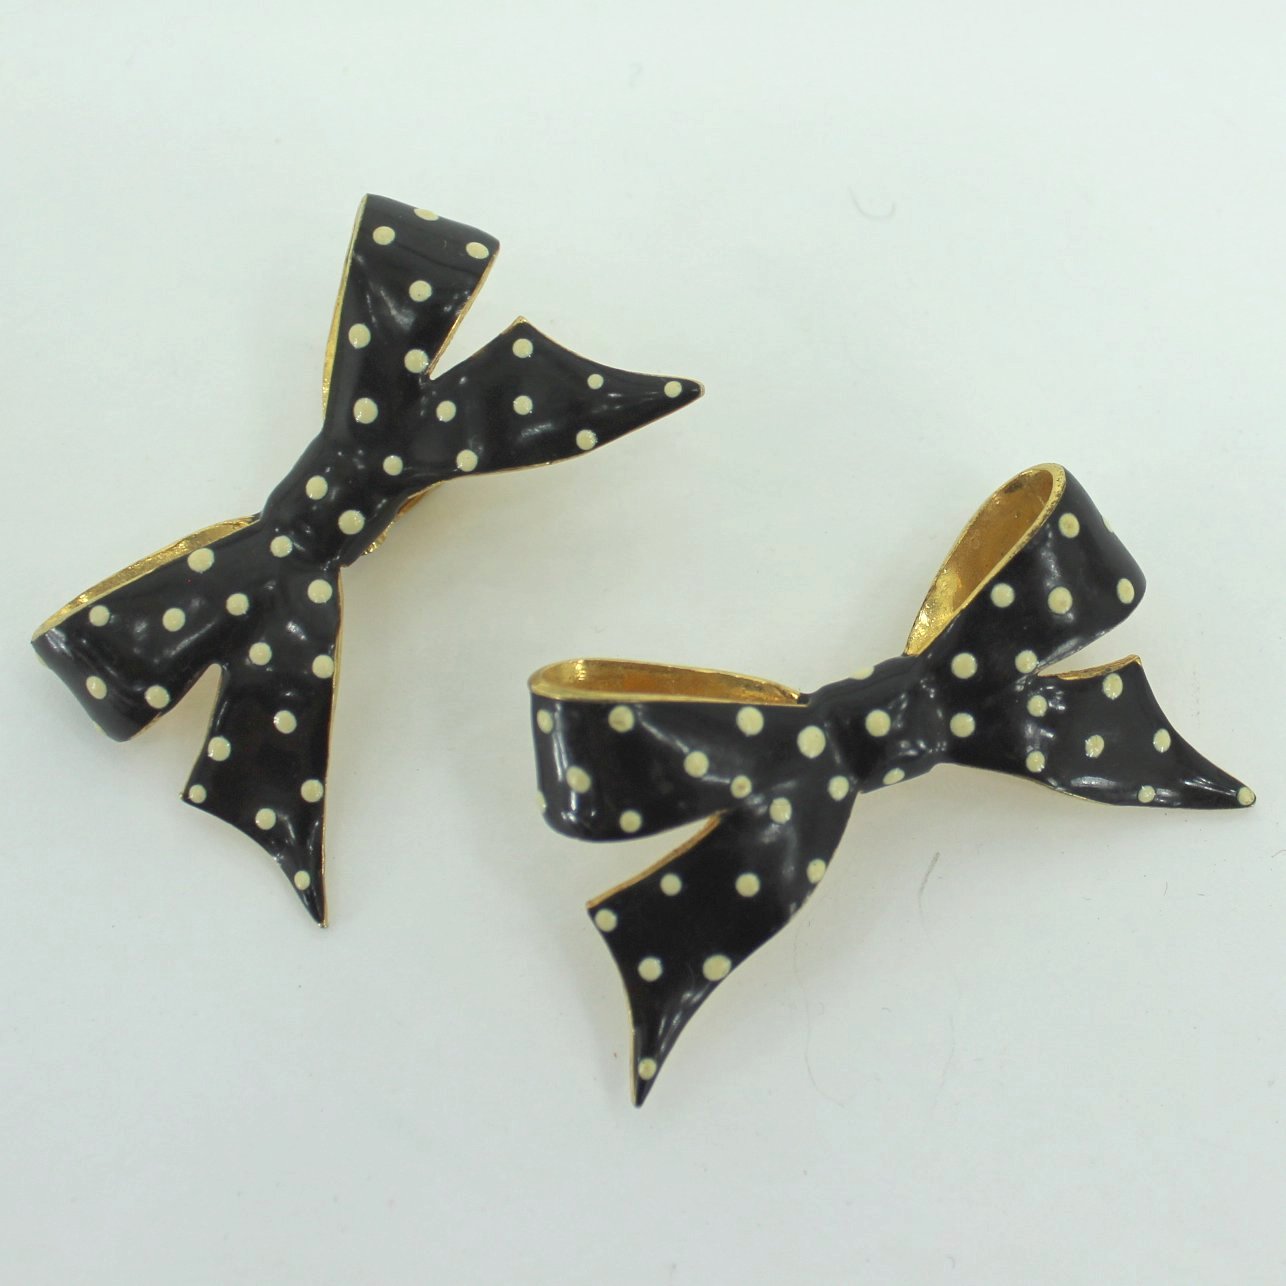 Kenneth Lane Clip Earrings Huge Polka Dot Metal Bows earrings flat bows